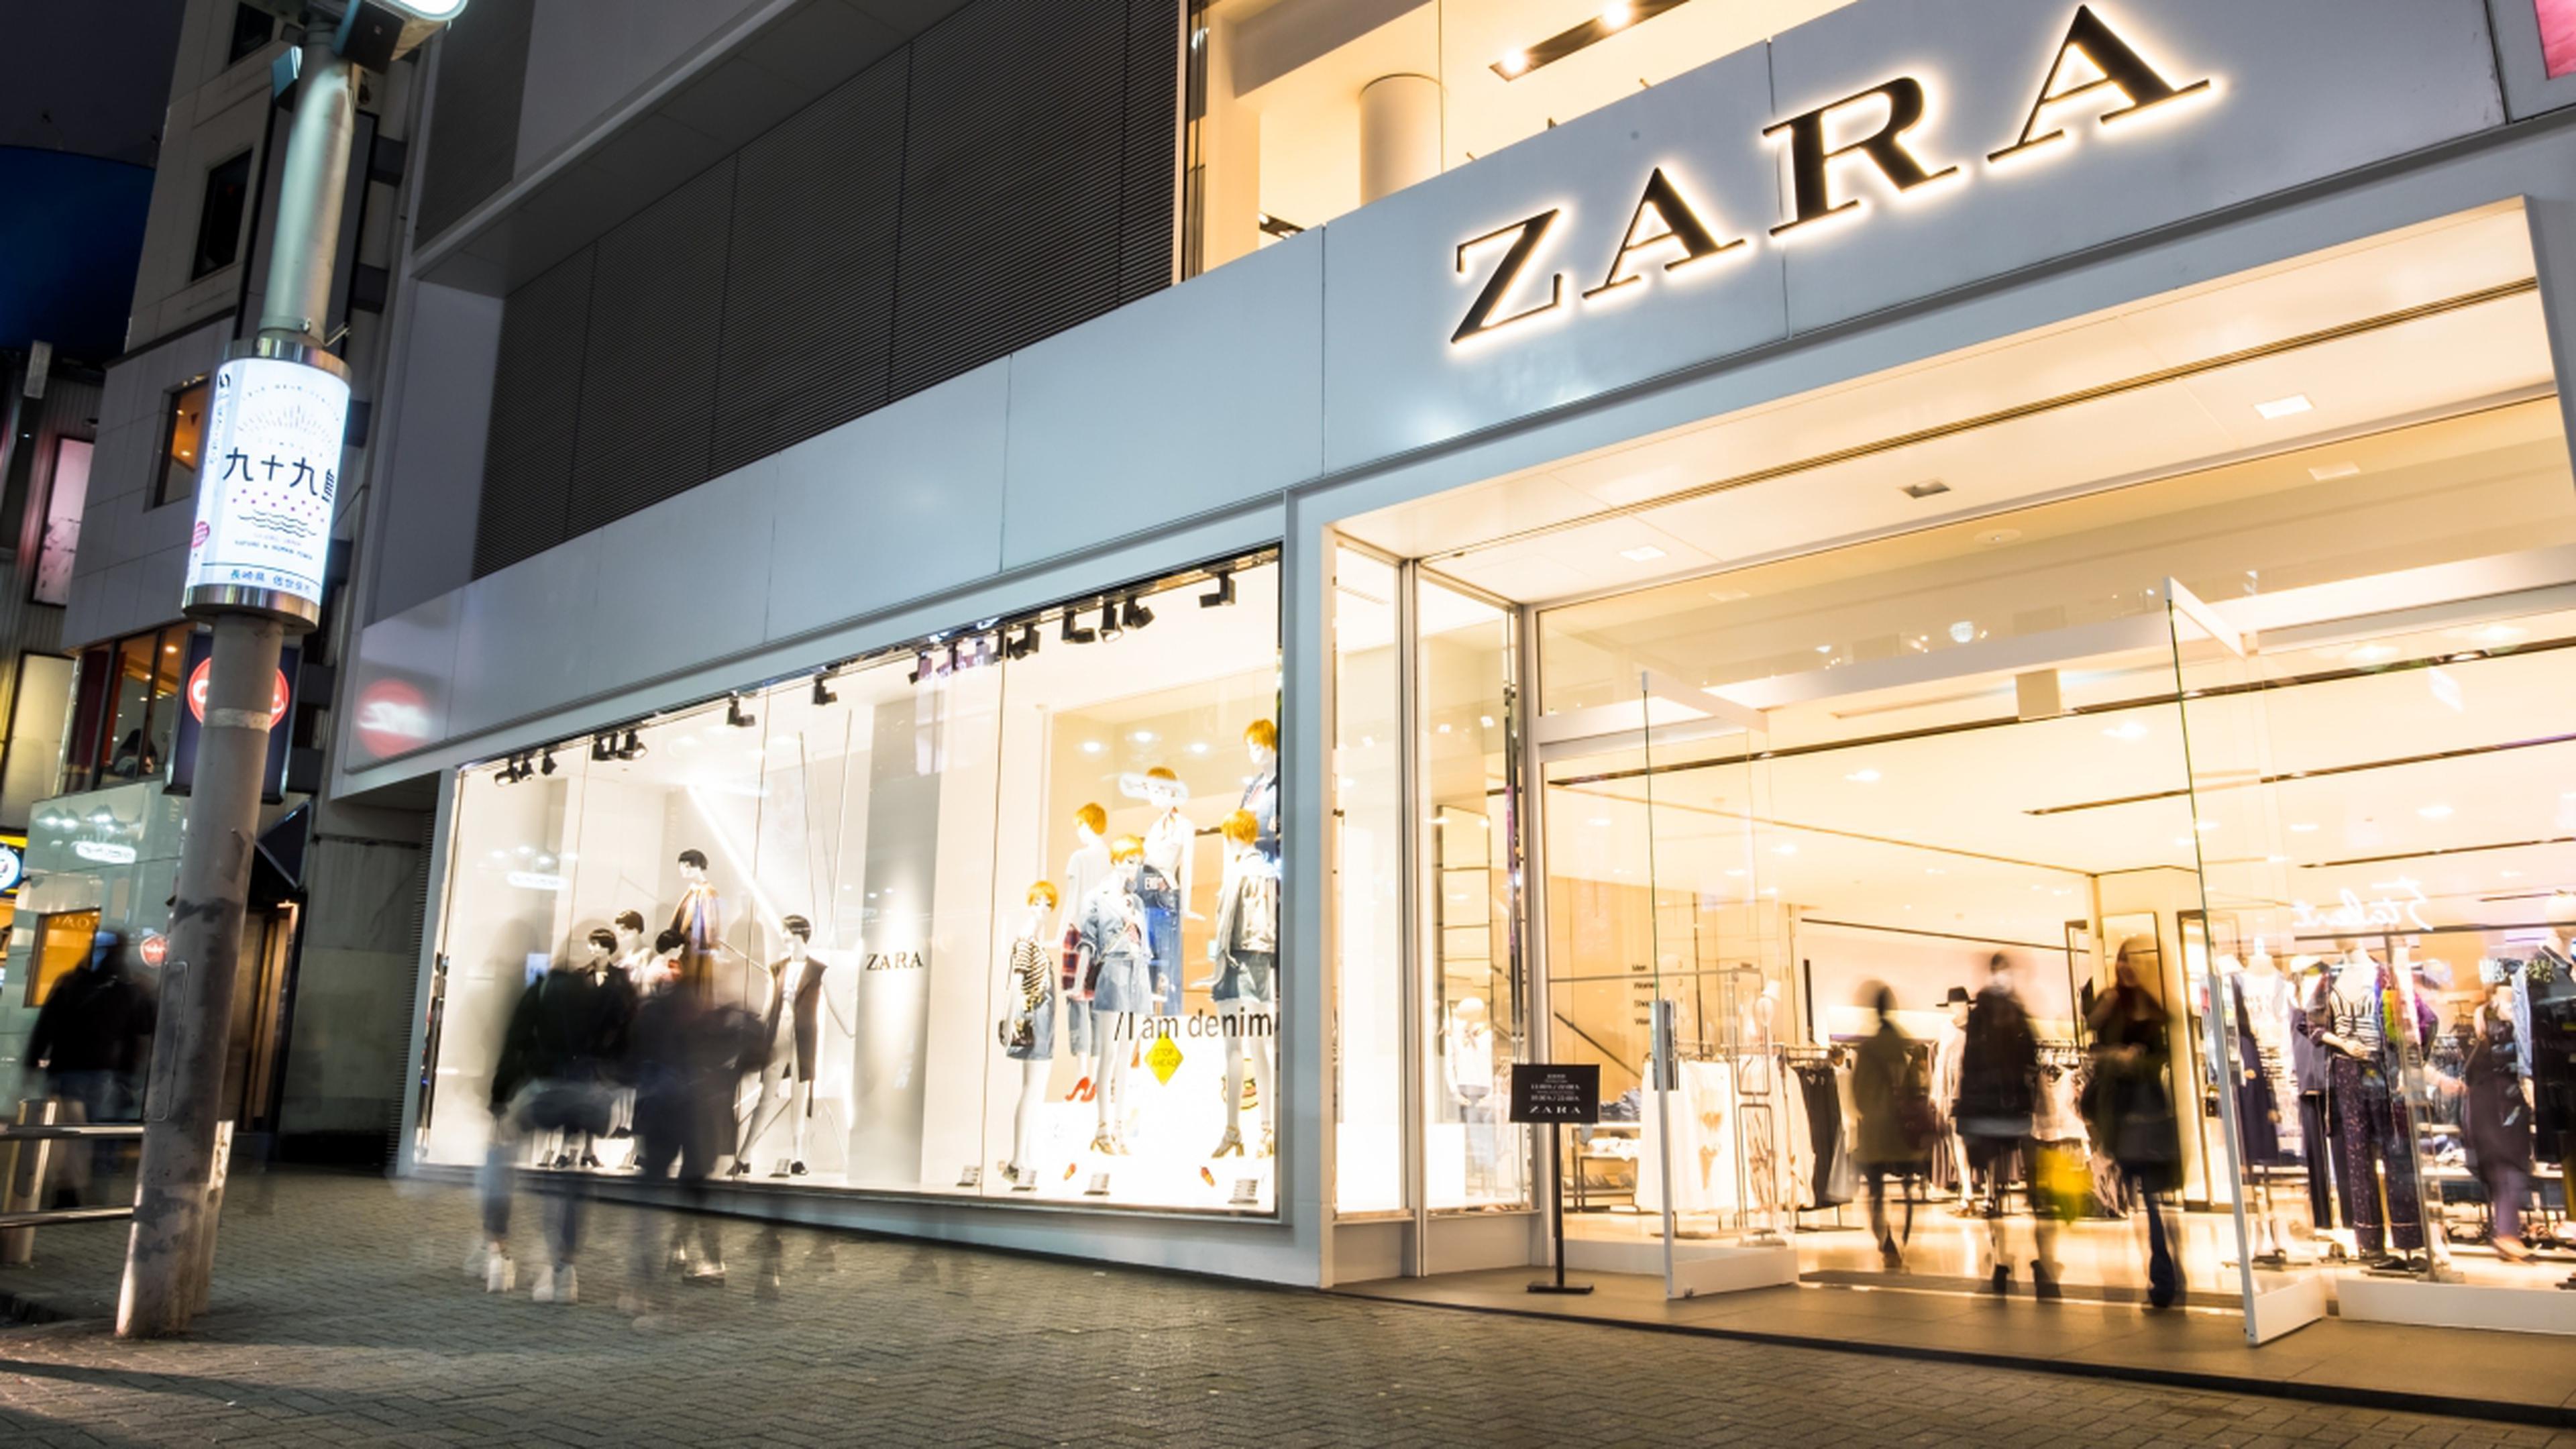 Zara encerra loja no centro da cidade do Luxemburgo